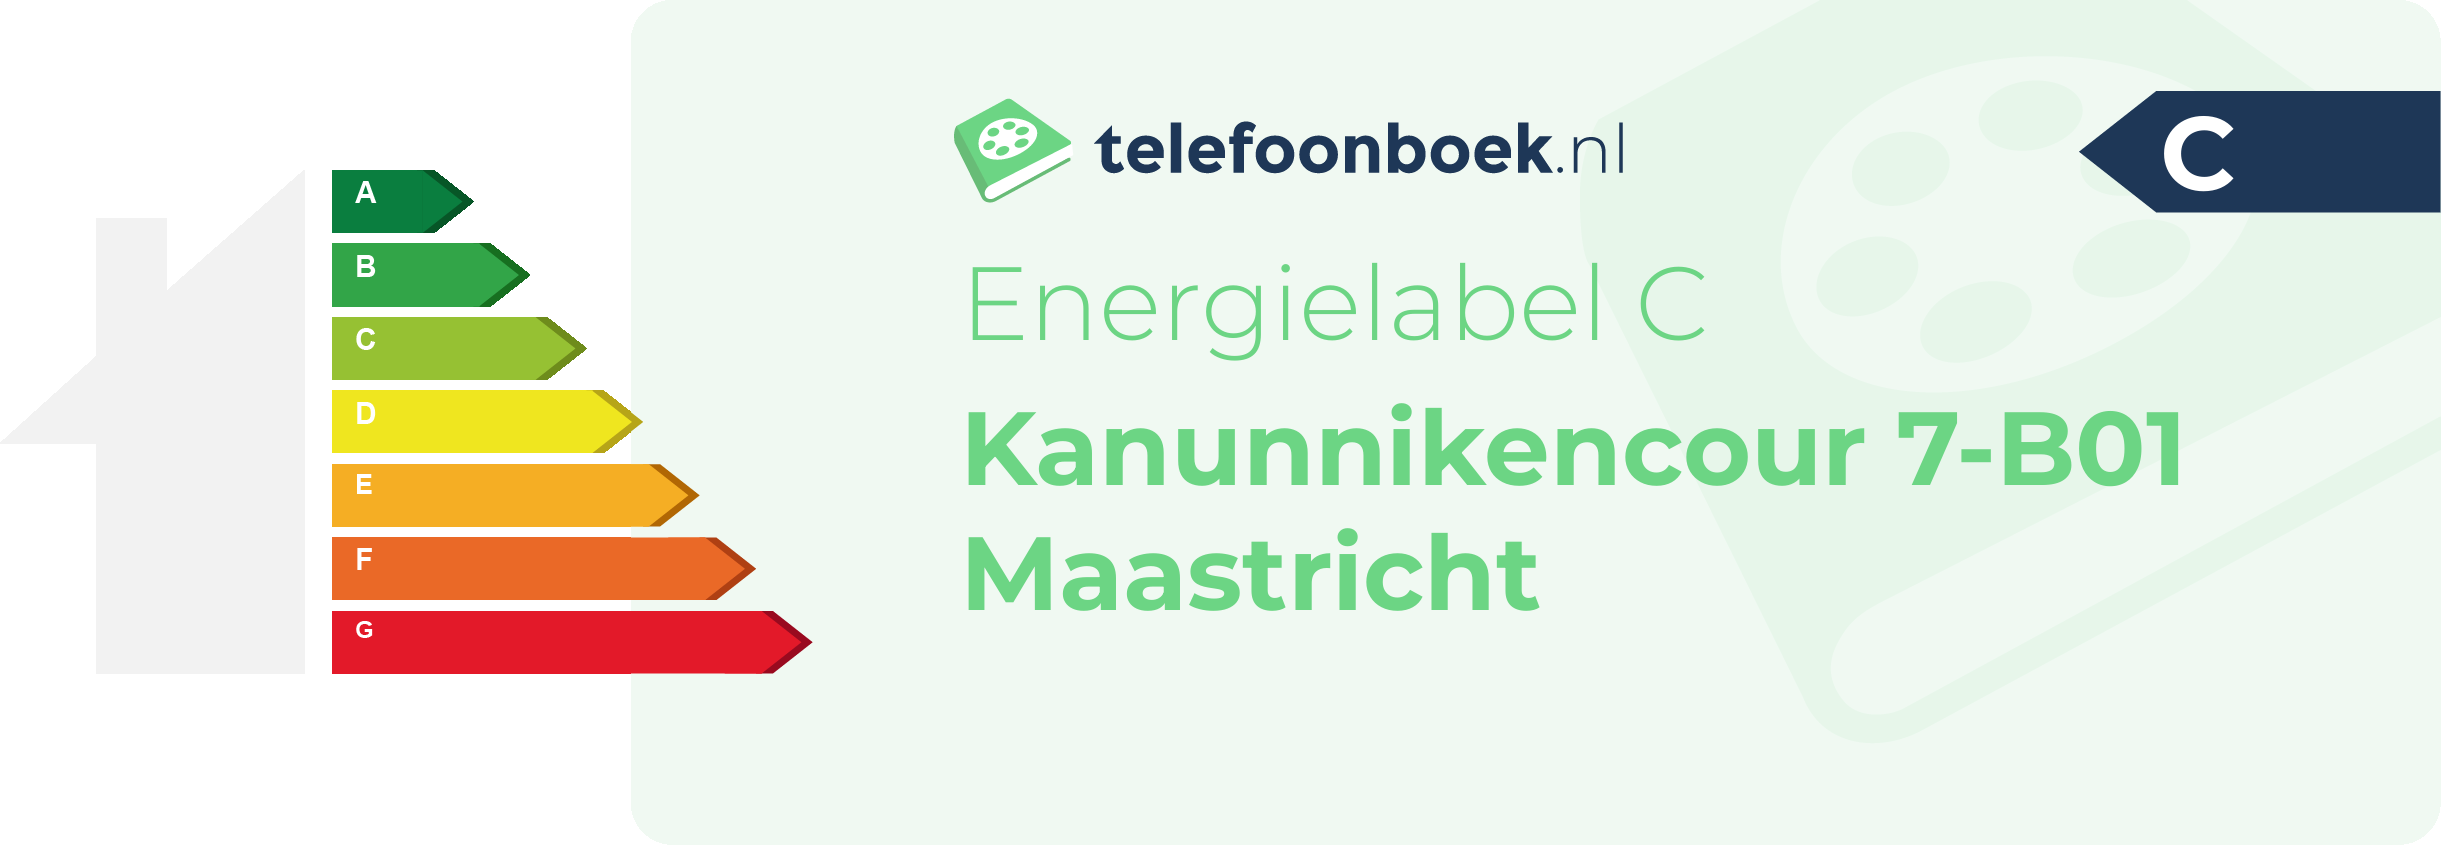 Energielabel Kanunnikencour 7-B01 Maastricht